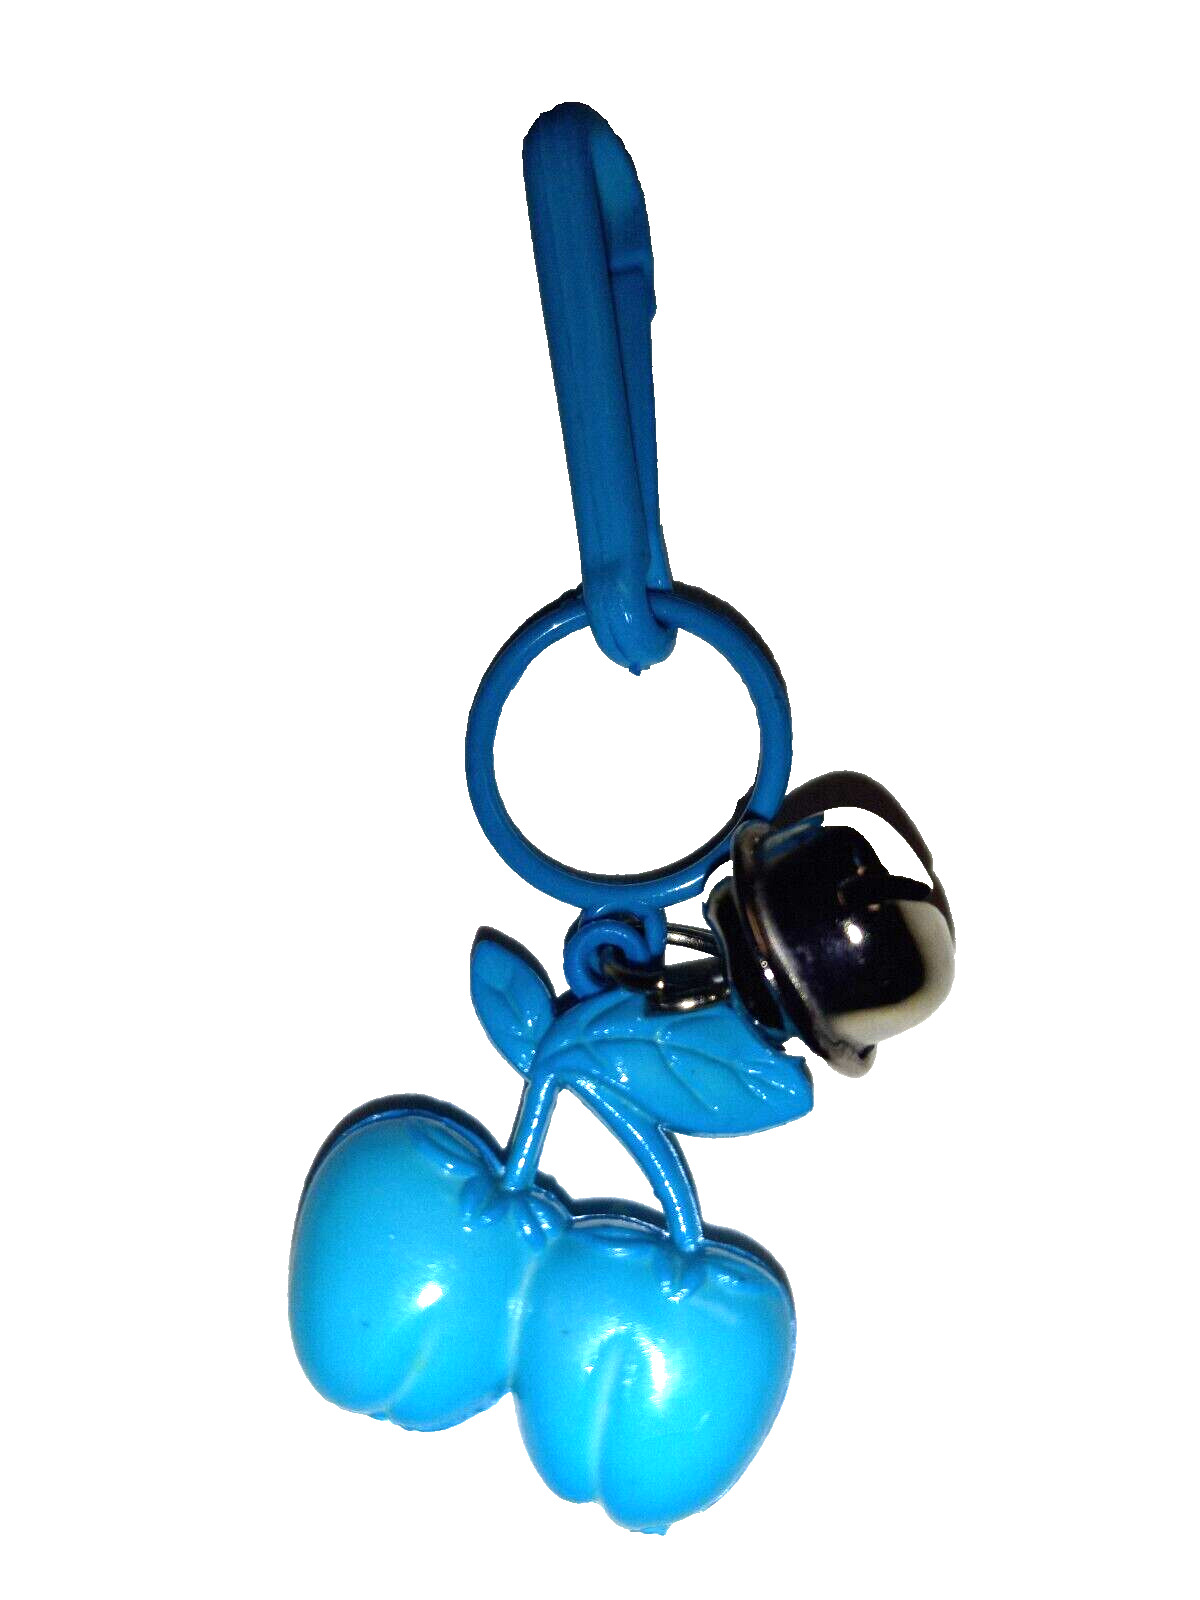 Vintage 1980s Plastic Charm Light Blue Cherries Charms Necklace Clip On Retro